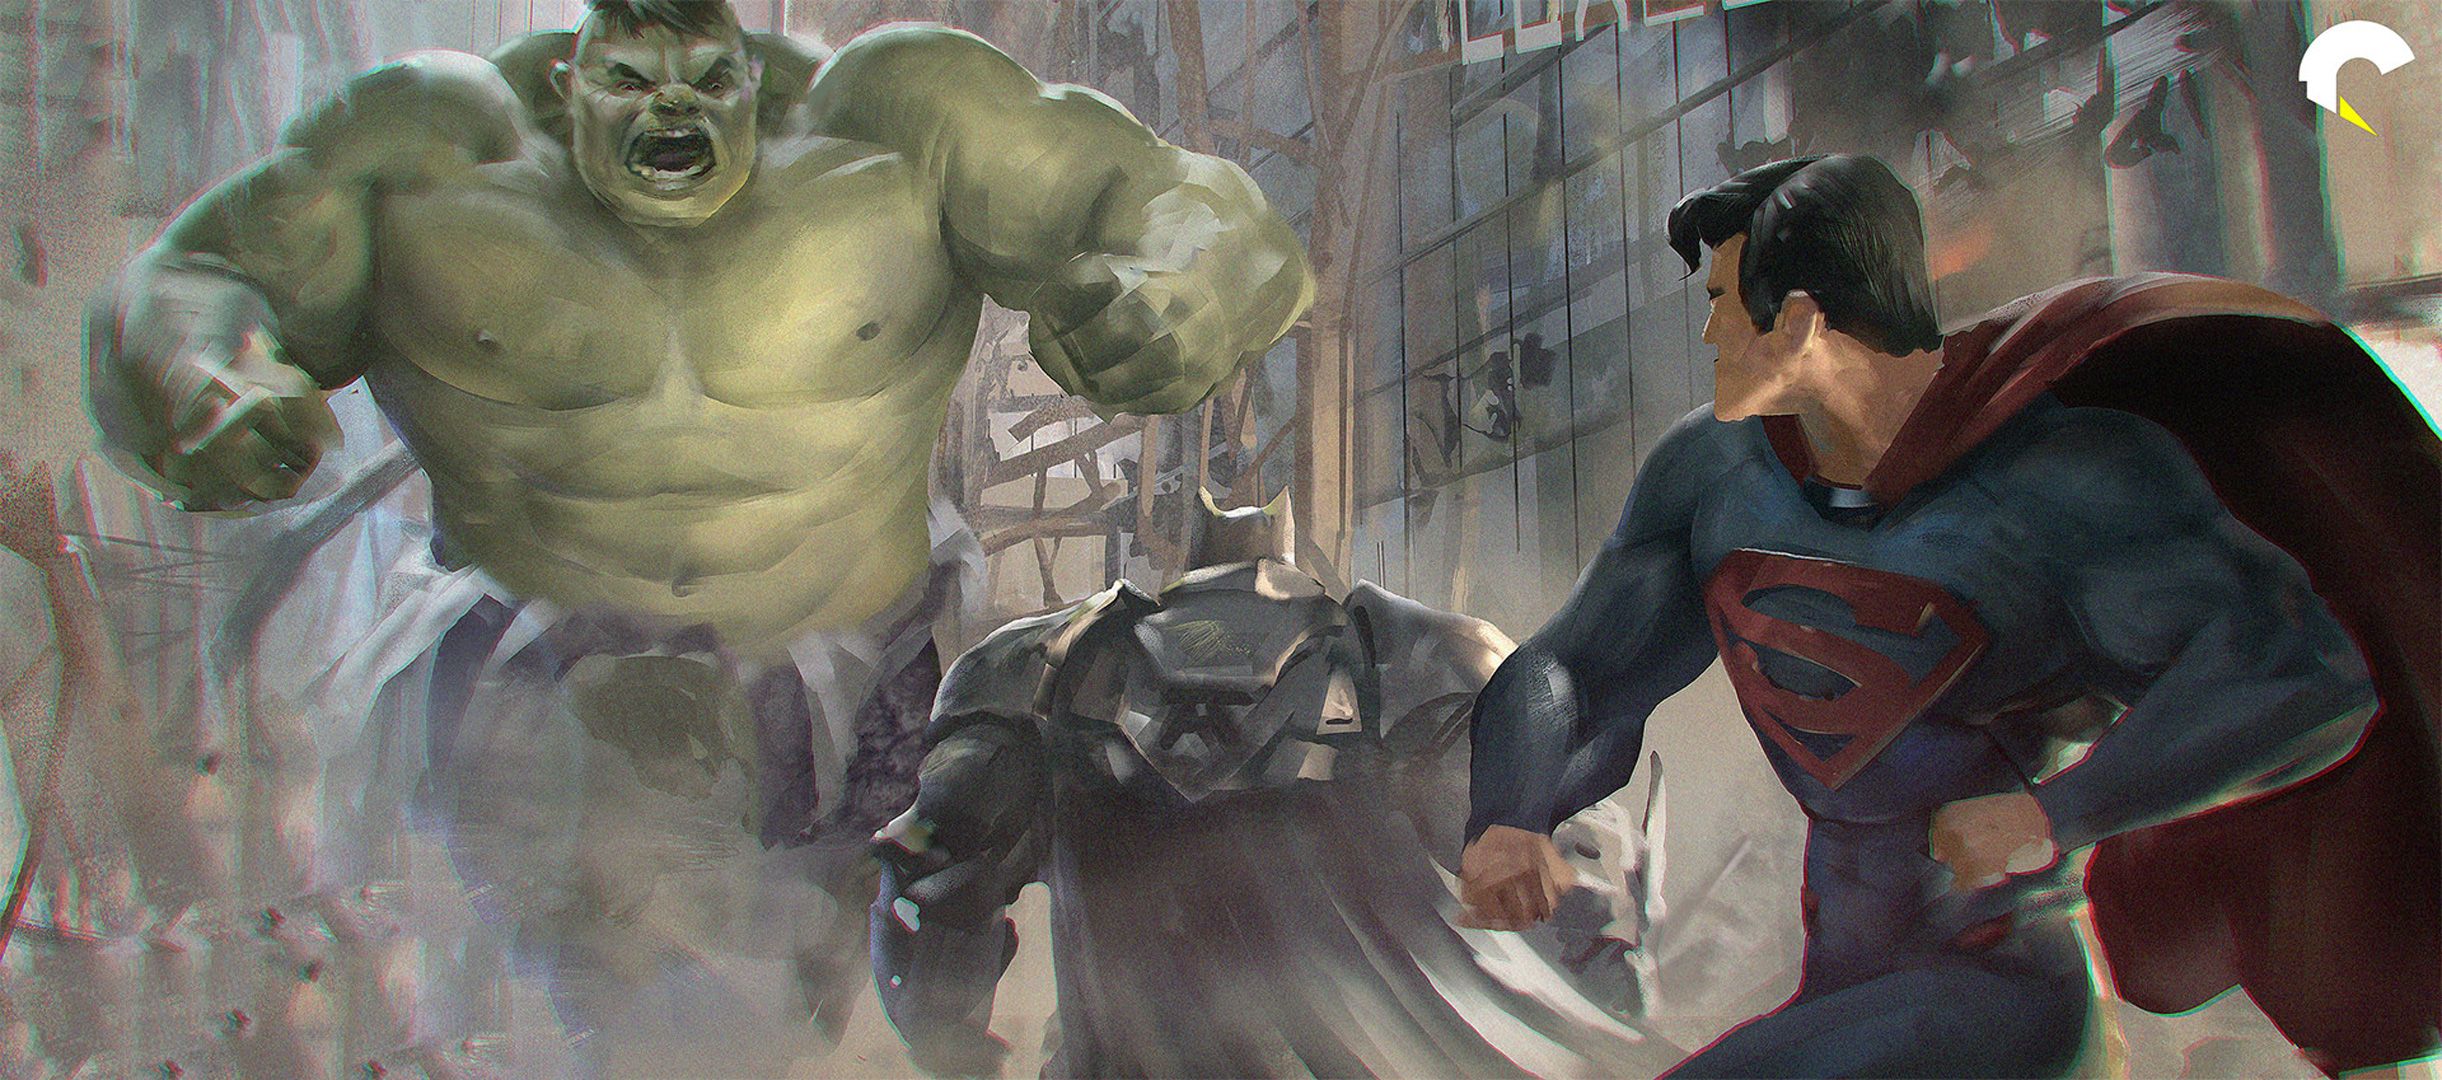 Superman And Batman Vs Hulk Artwork, HD Superheroes, 4k Wallpaper, Image, Background, Photo and Picture